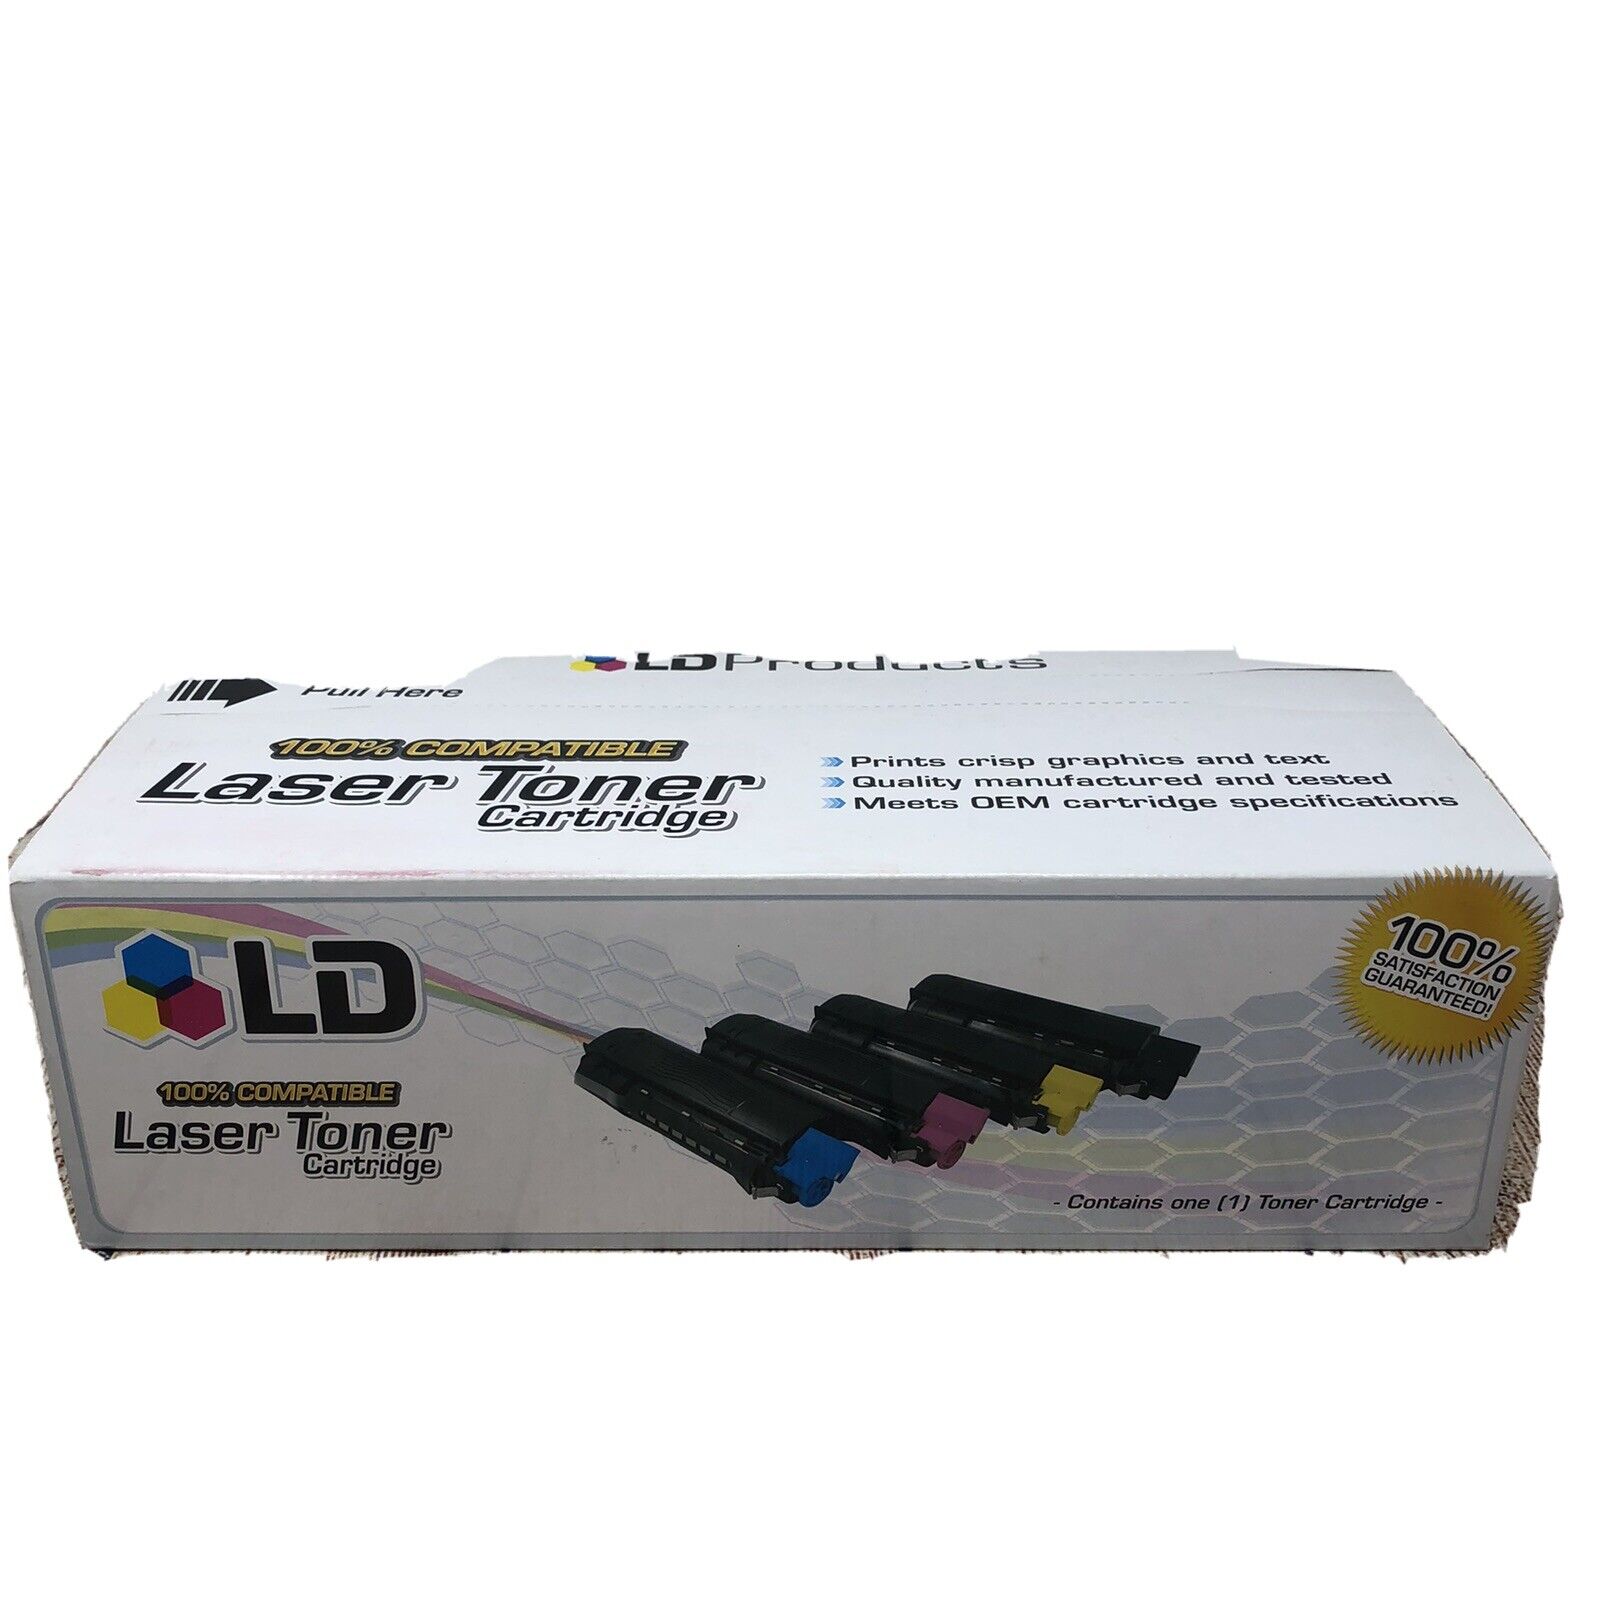 LD Compatible Okidata LD-43034803 Cyan Laser Toner Cartridge for Oki C3200